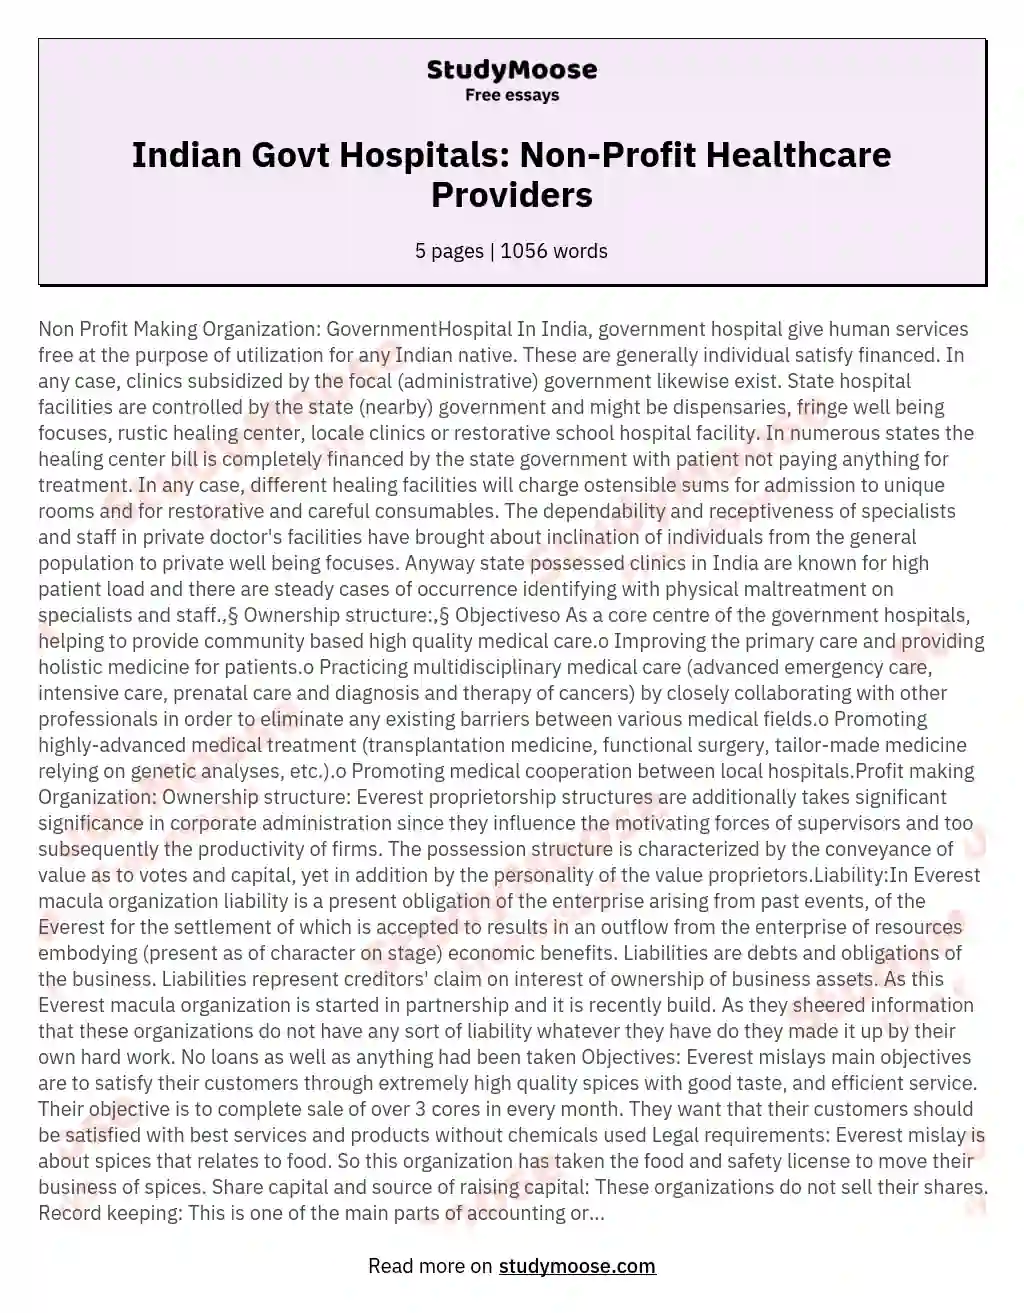 Indian Govt Hospitals: Non-Profit Healthcare Providers